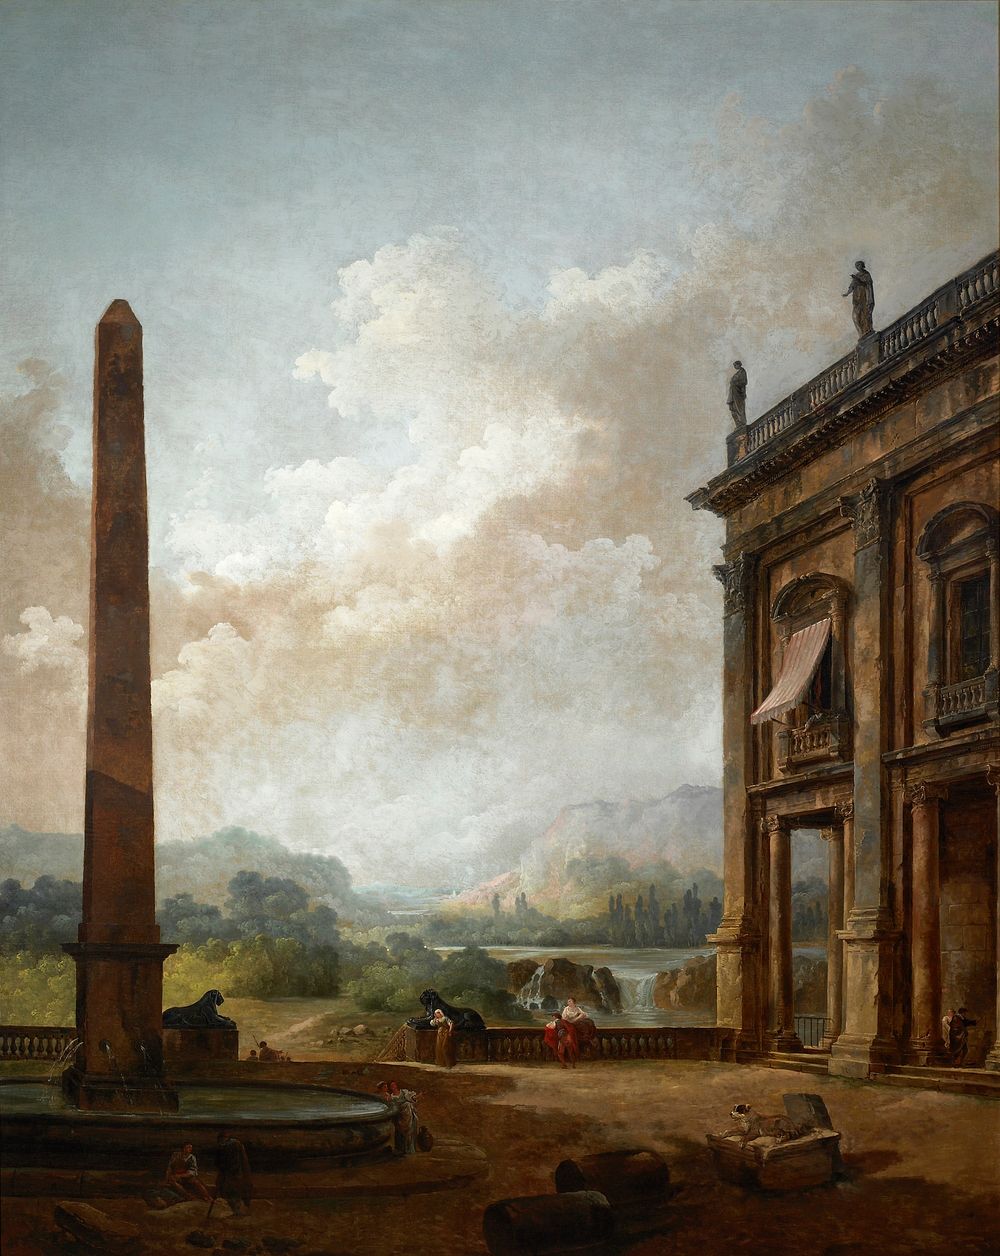 The Obelisk (1789) in high resolution by Hubert Robert. 